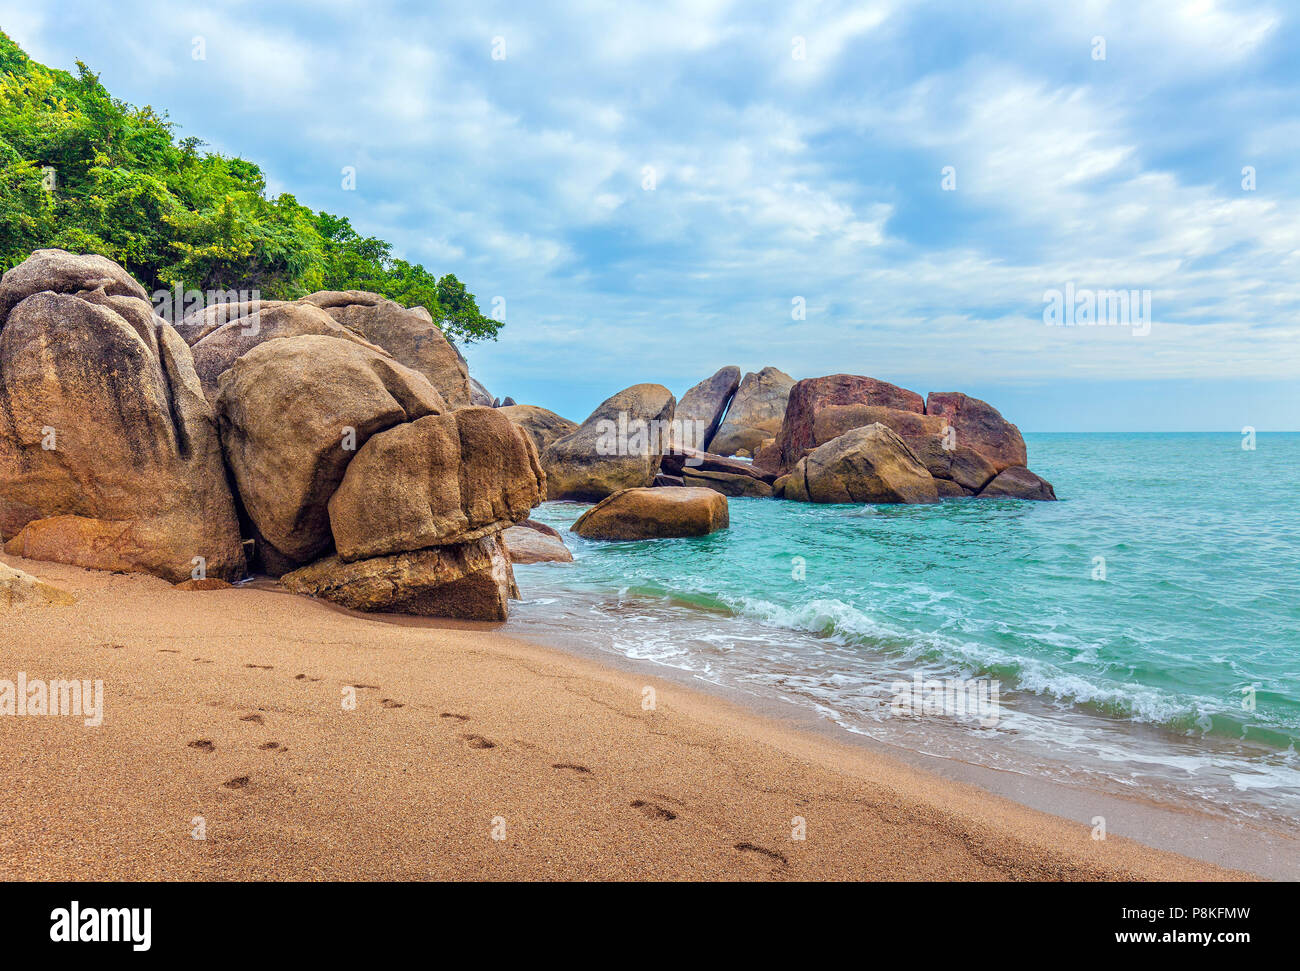 Coral Cove beach on Koh Samui in Thailand. Stock Photo